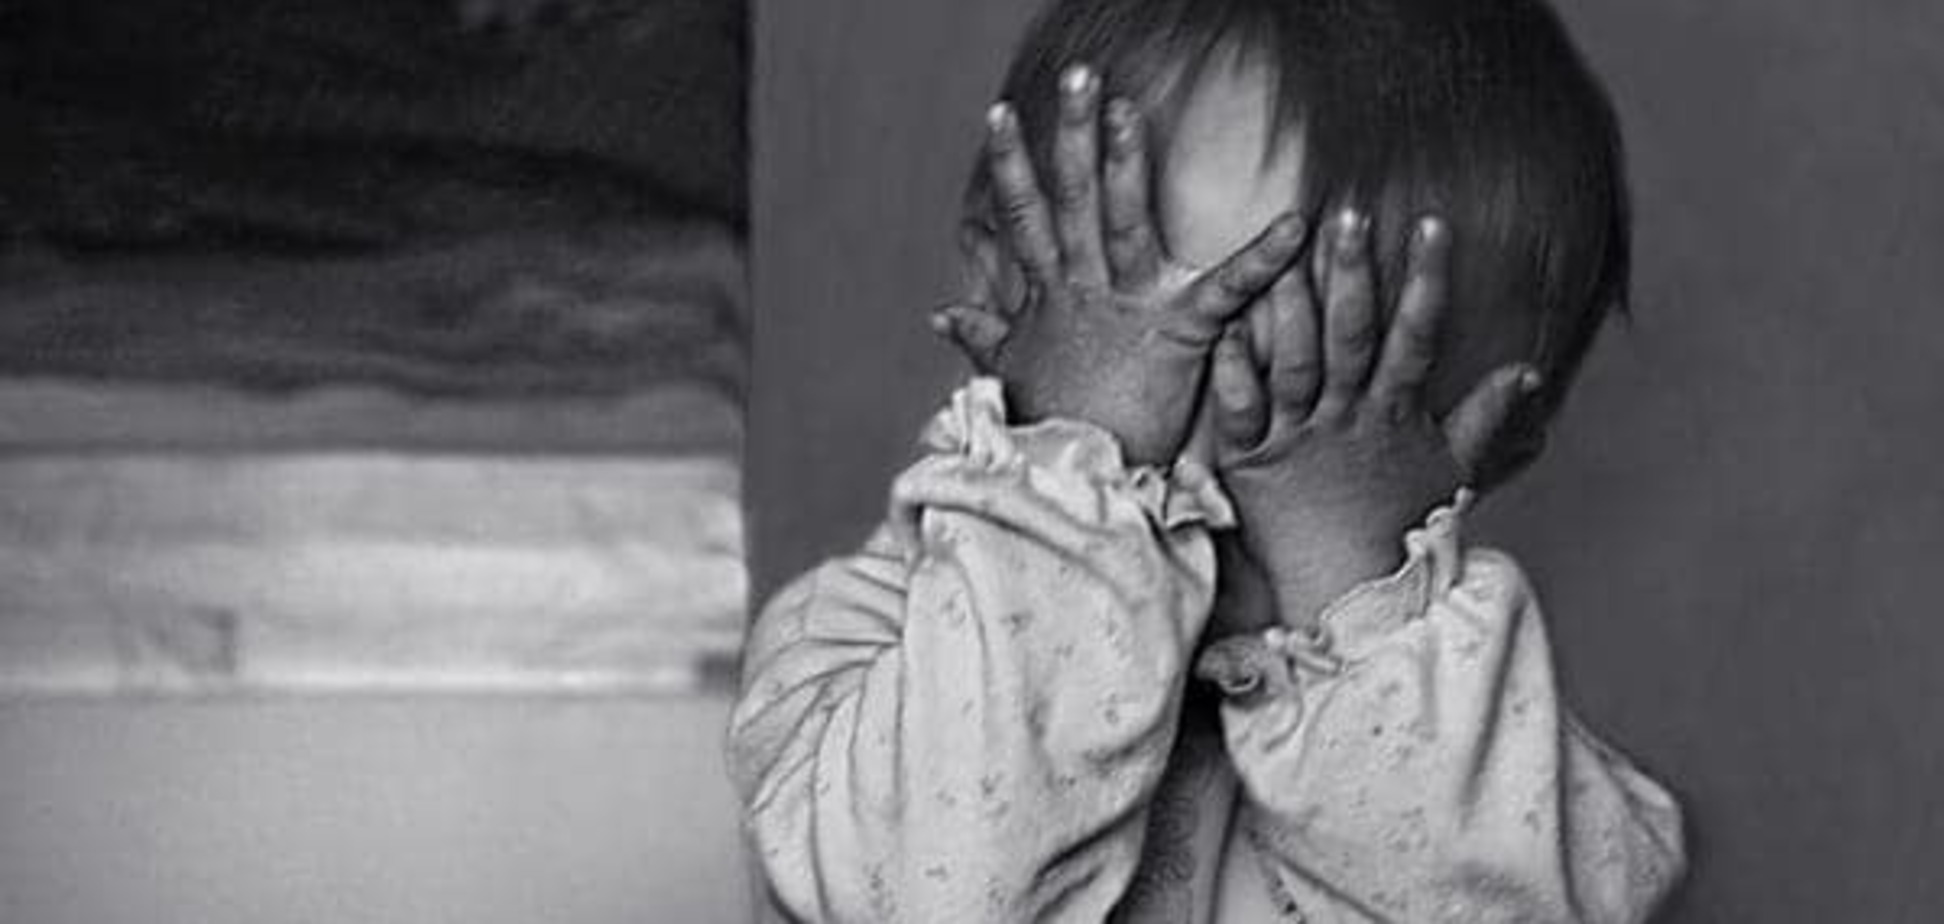  Нападение на ребенка в Москве: почти все прошли мимо